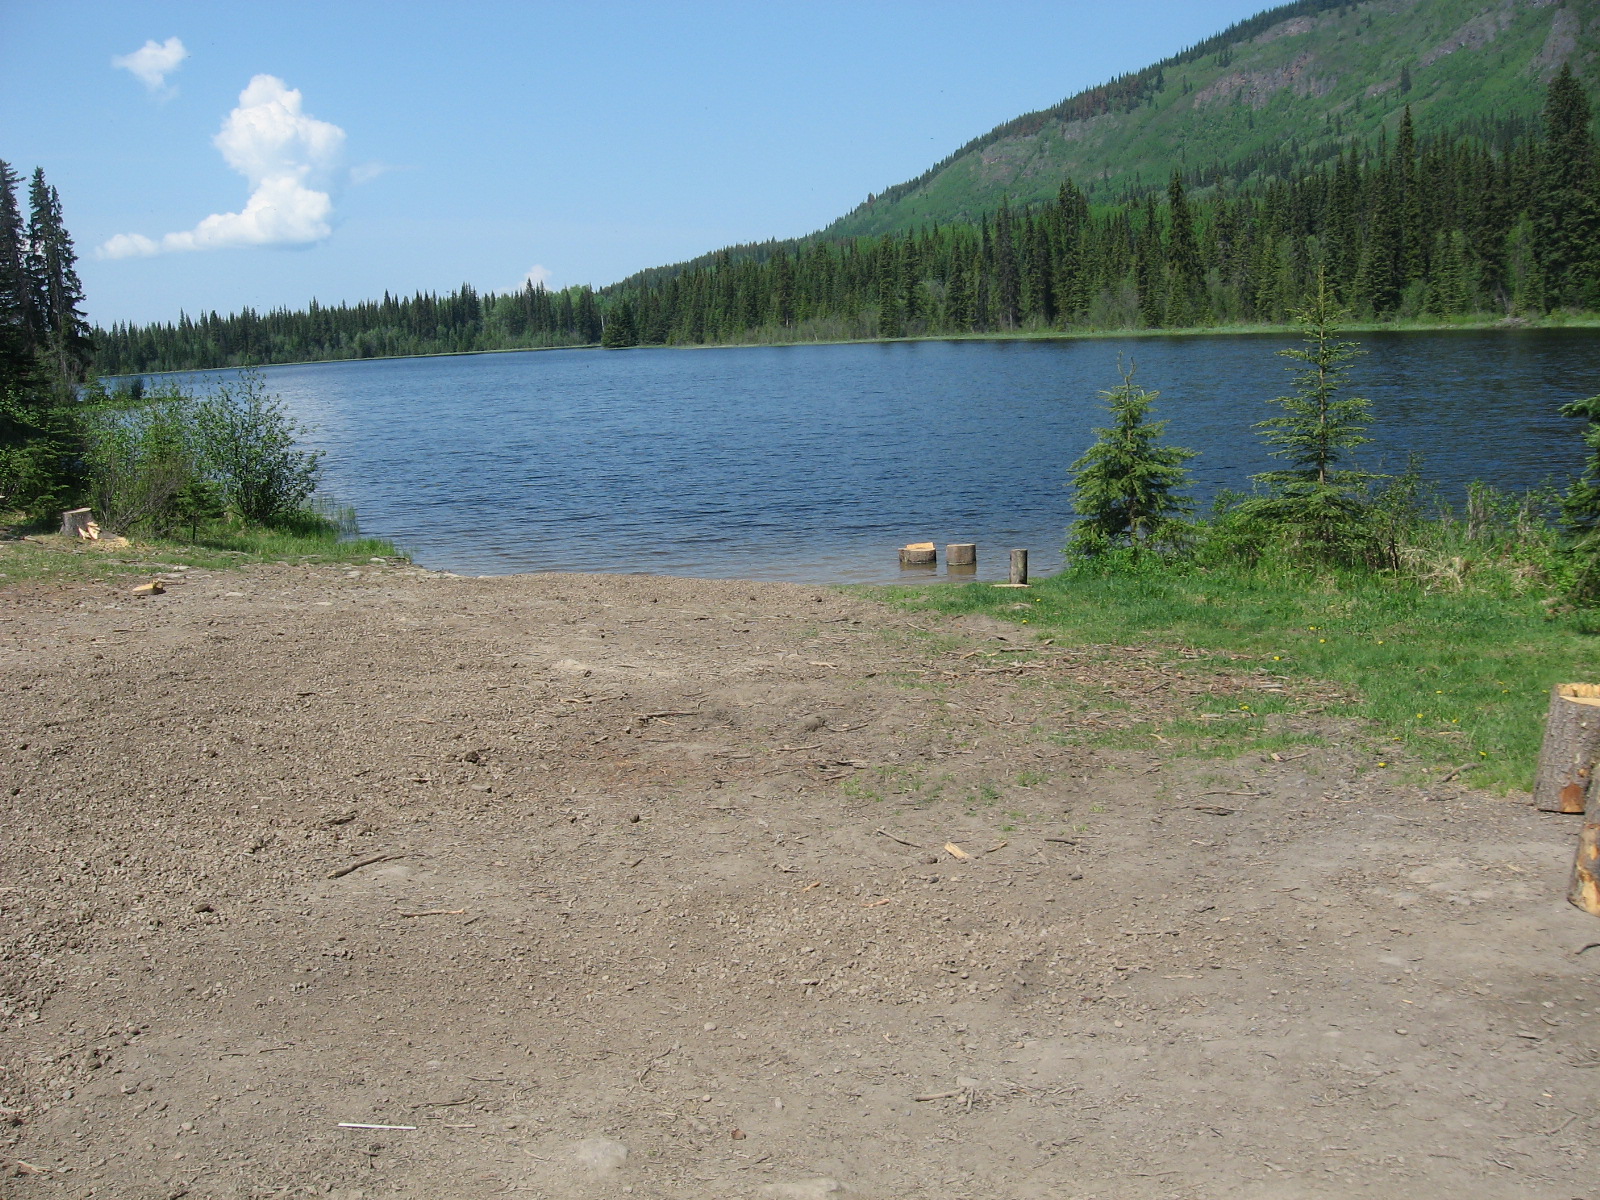 Helen Lake